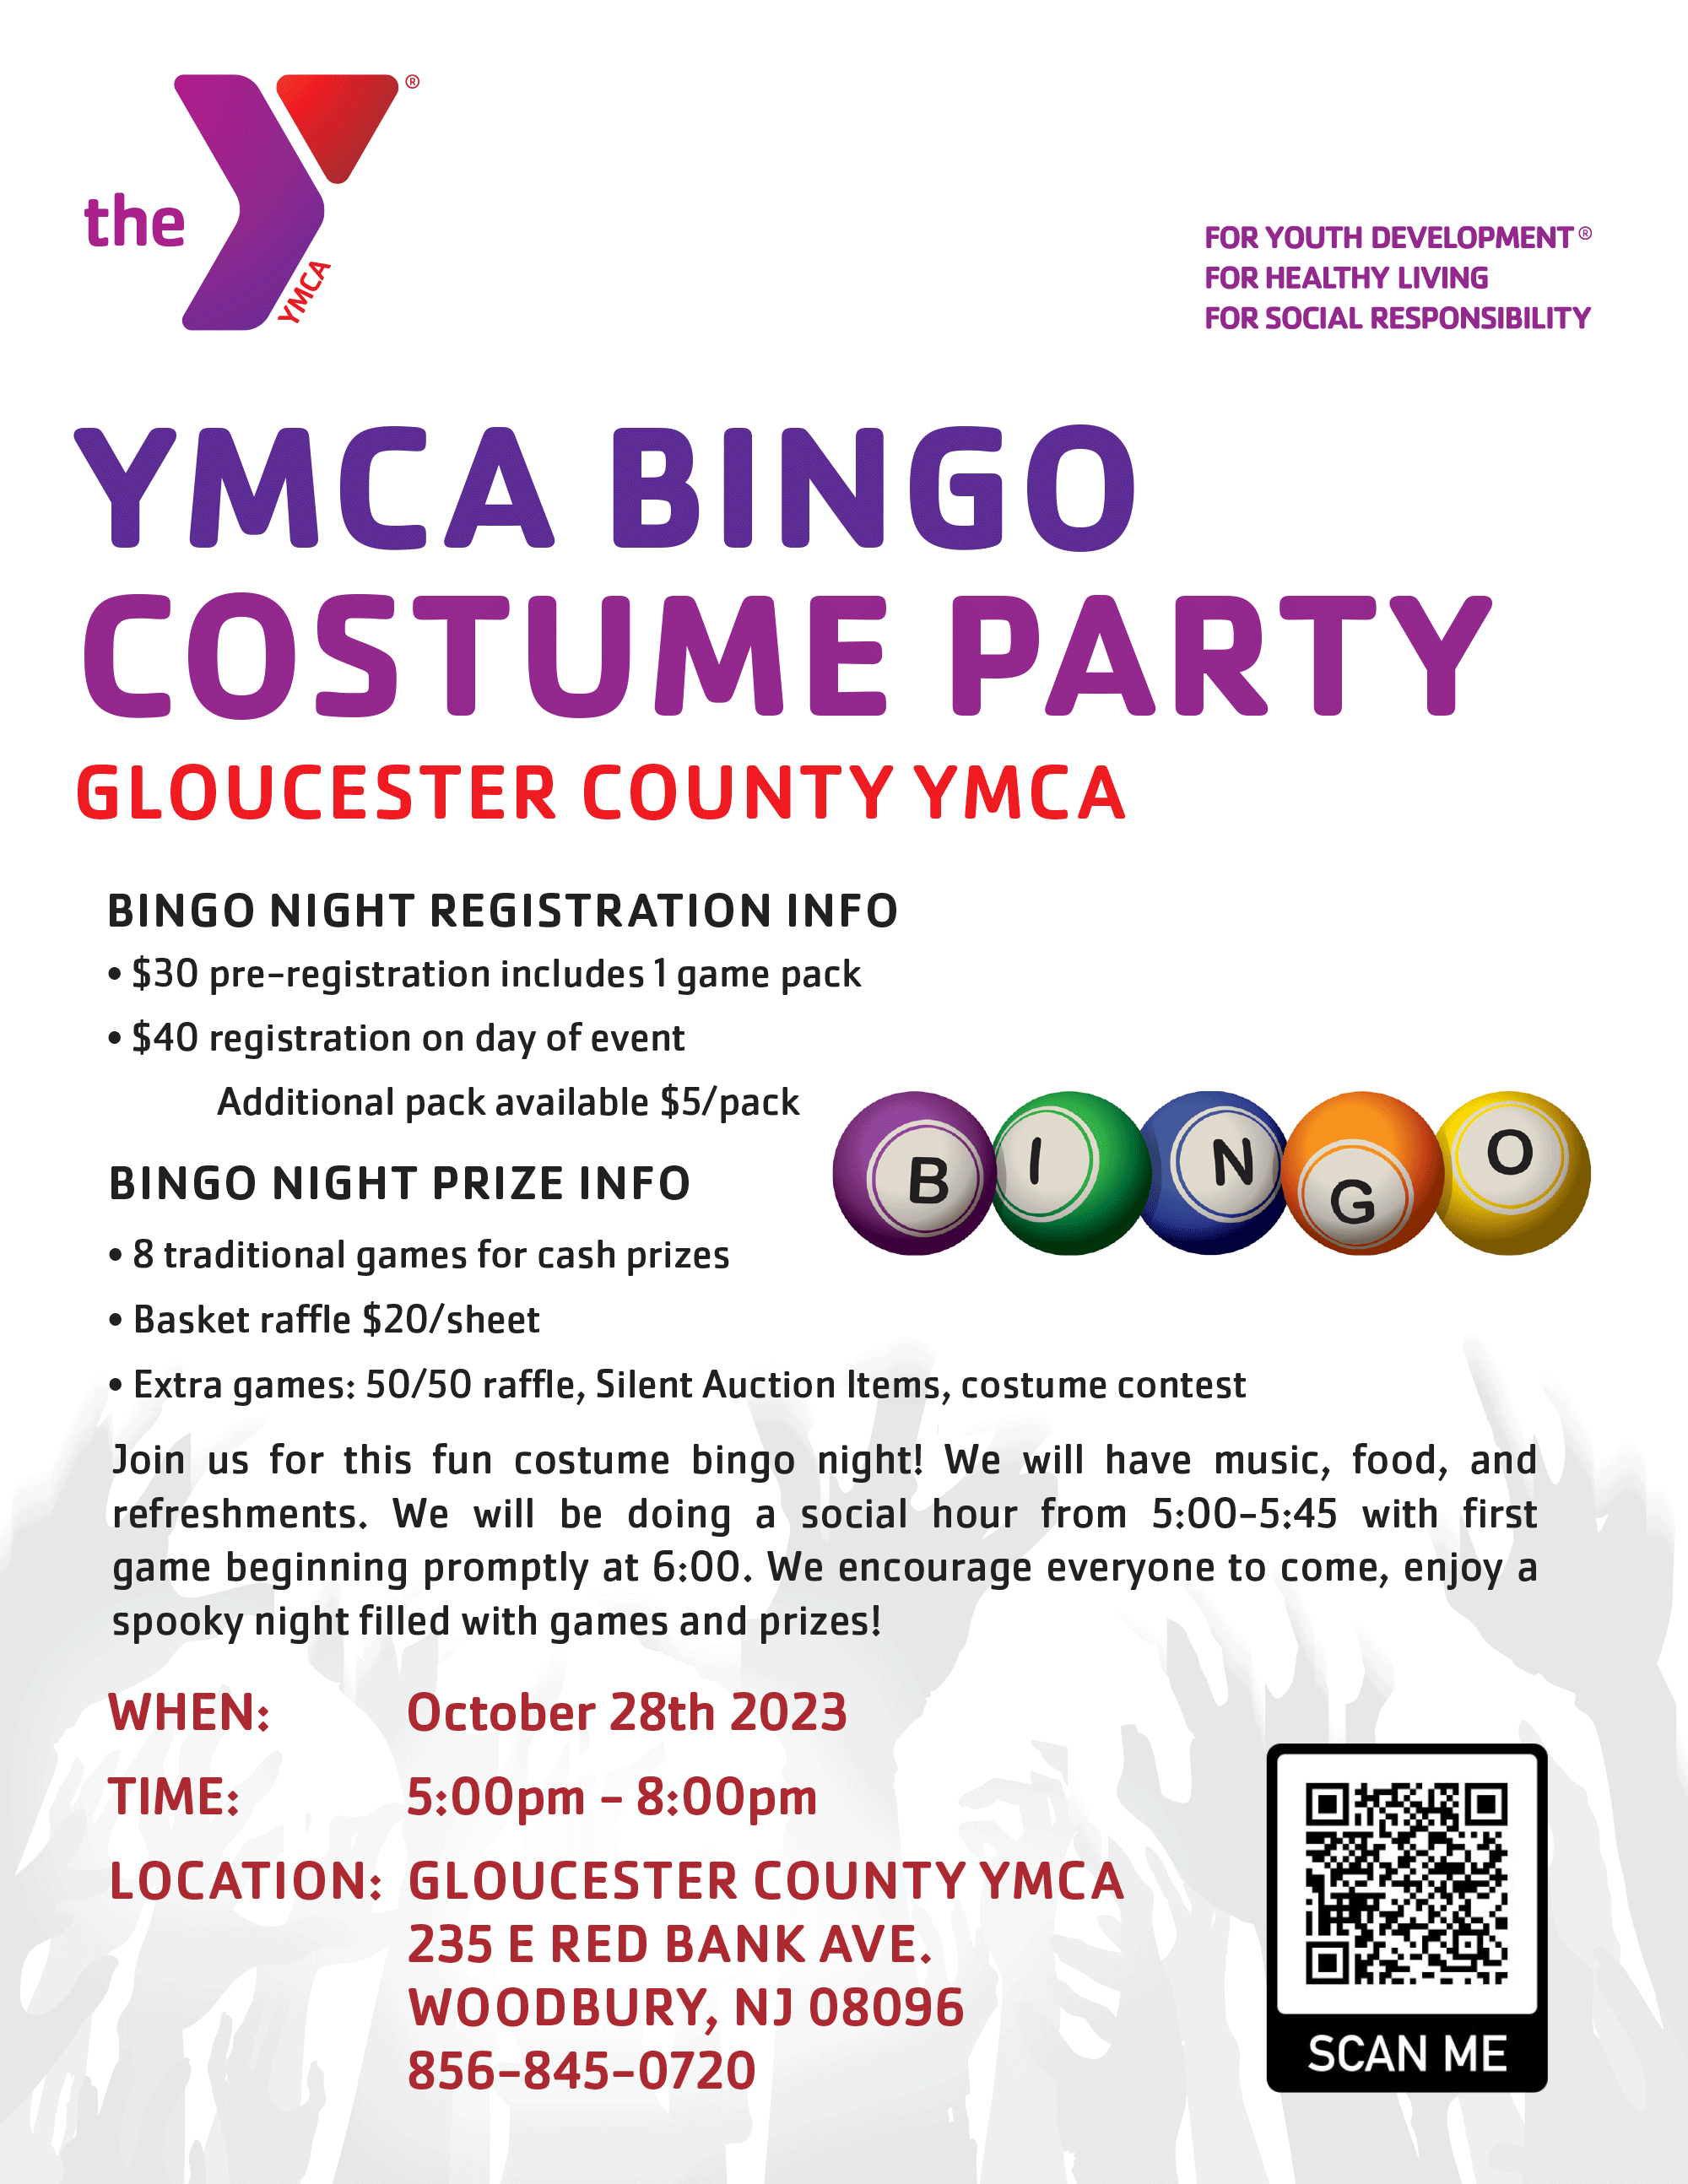 YMCA Bingo Costume Party - Gloucester County YMCA